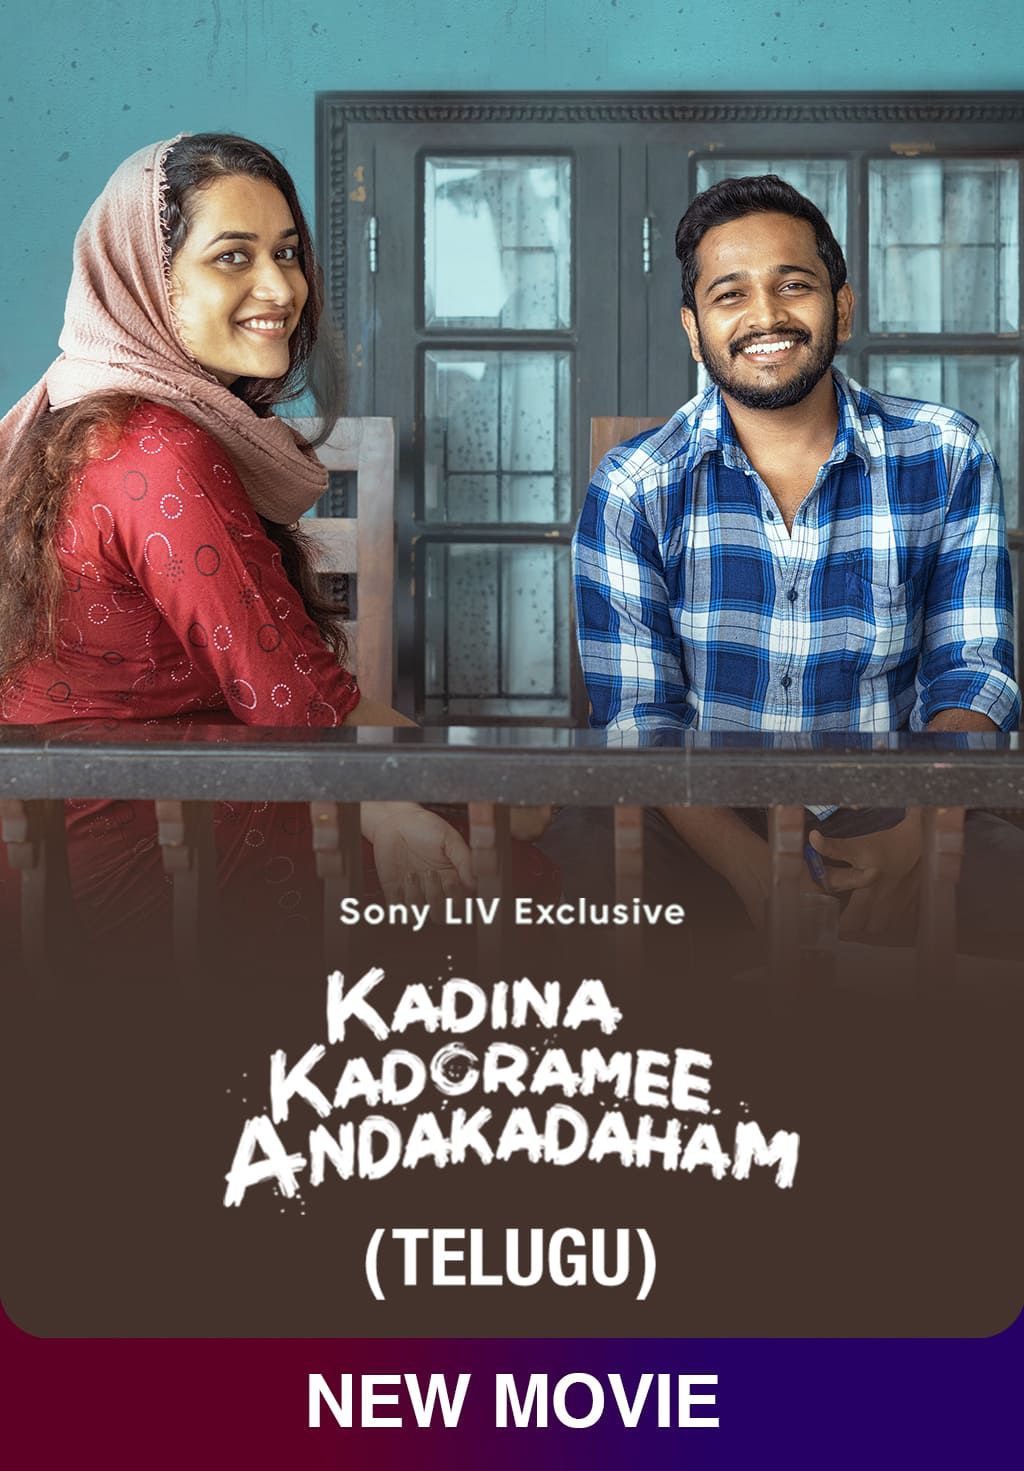 Kadina Kadoramee Andakadaham (Telugu)